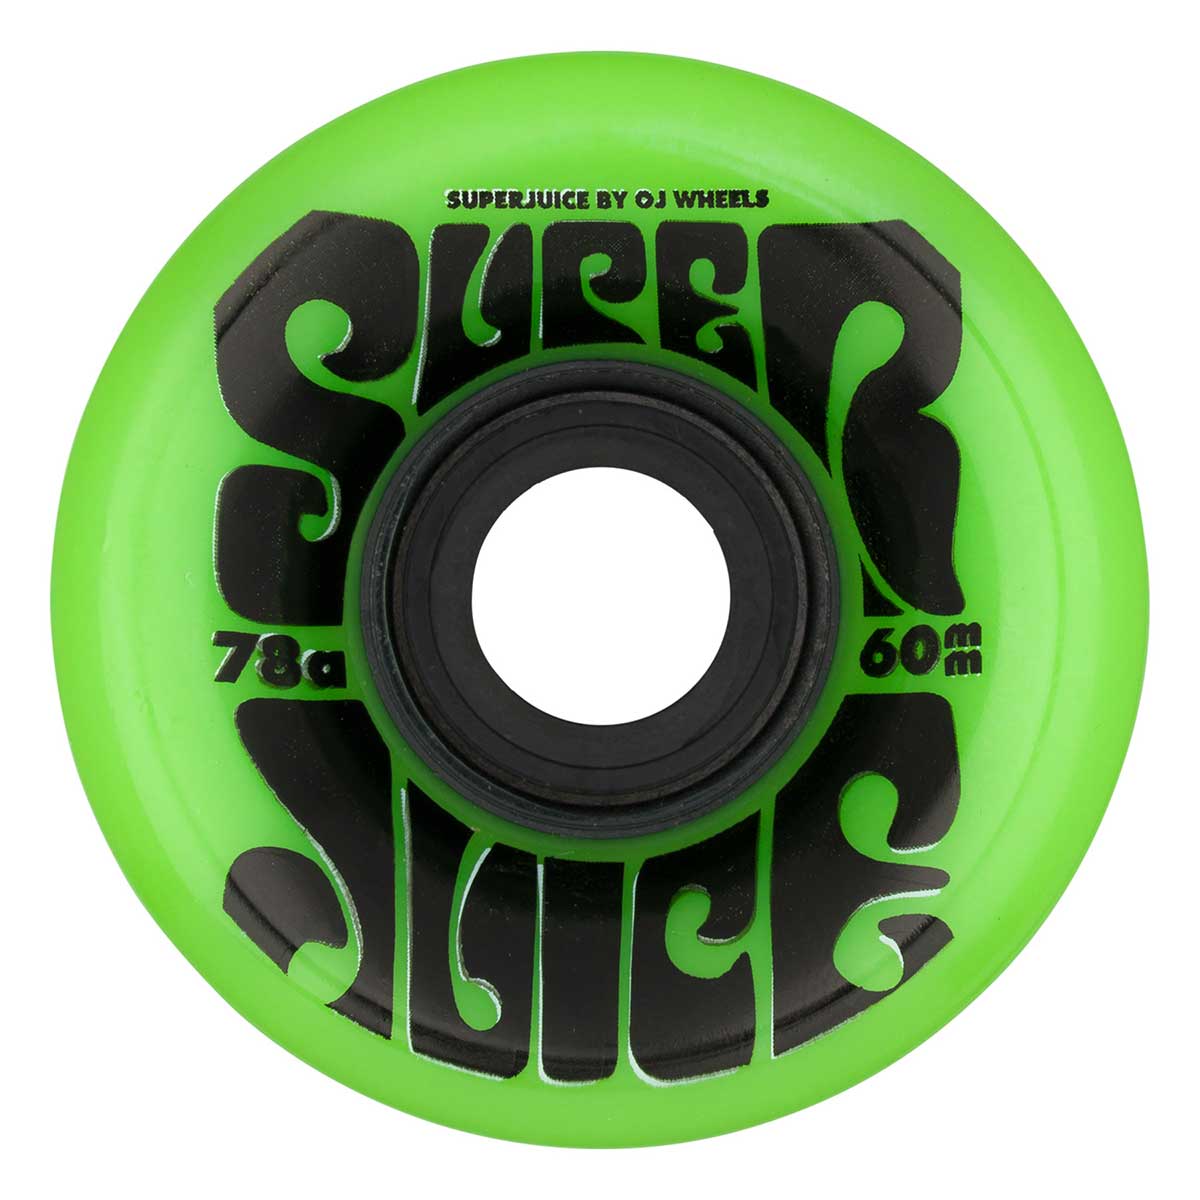 OJ SUPER JUICE WHEELS (BRIGHT GREEN) 60MM 78A 4 PACK